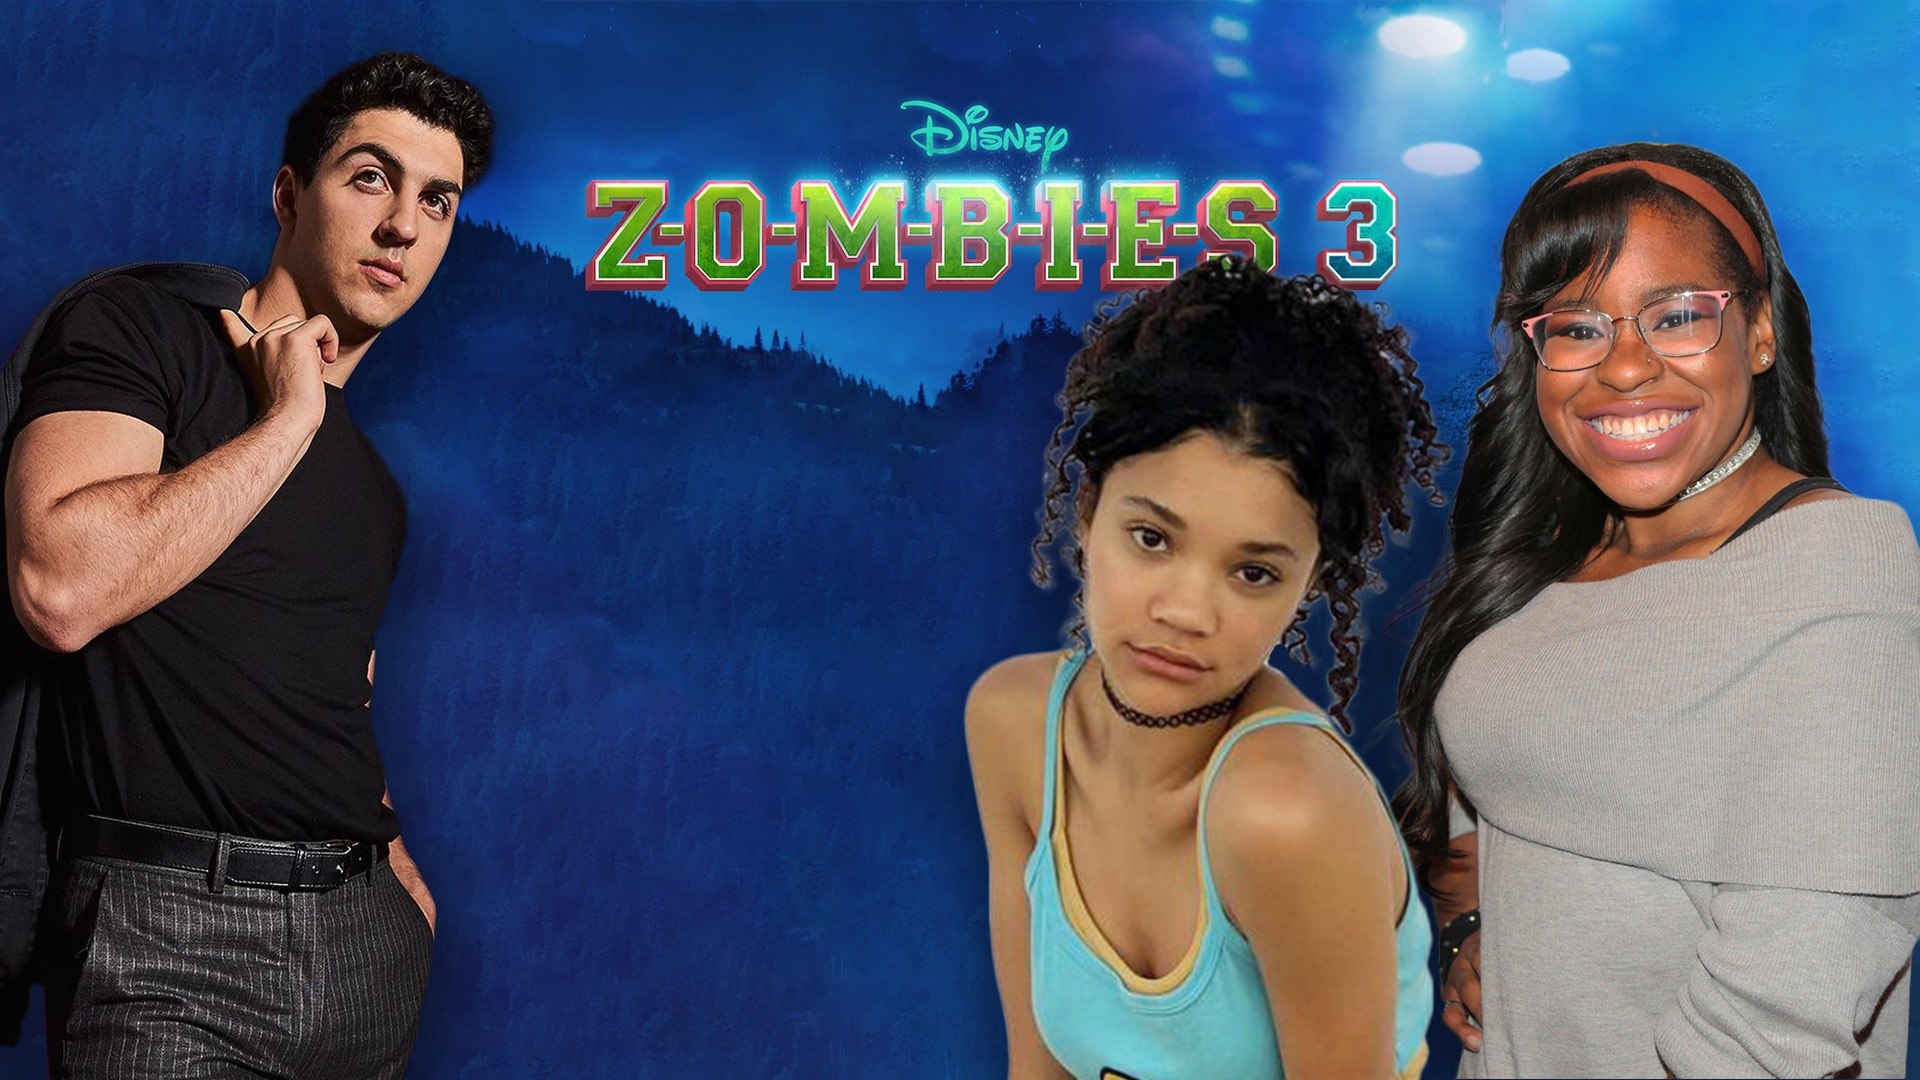 Disney Zombies Cast